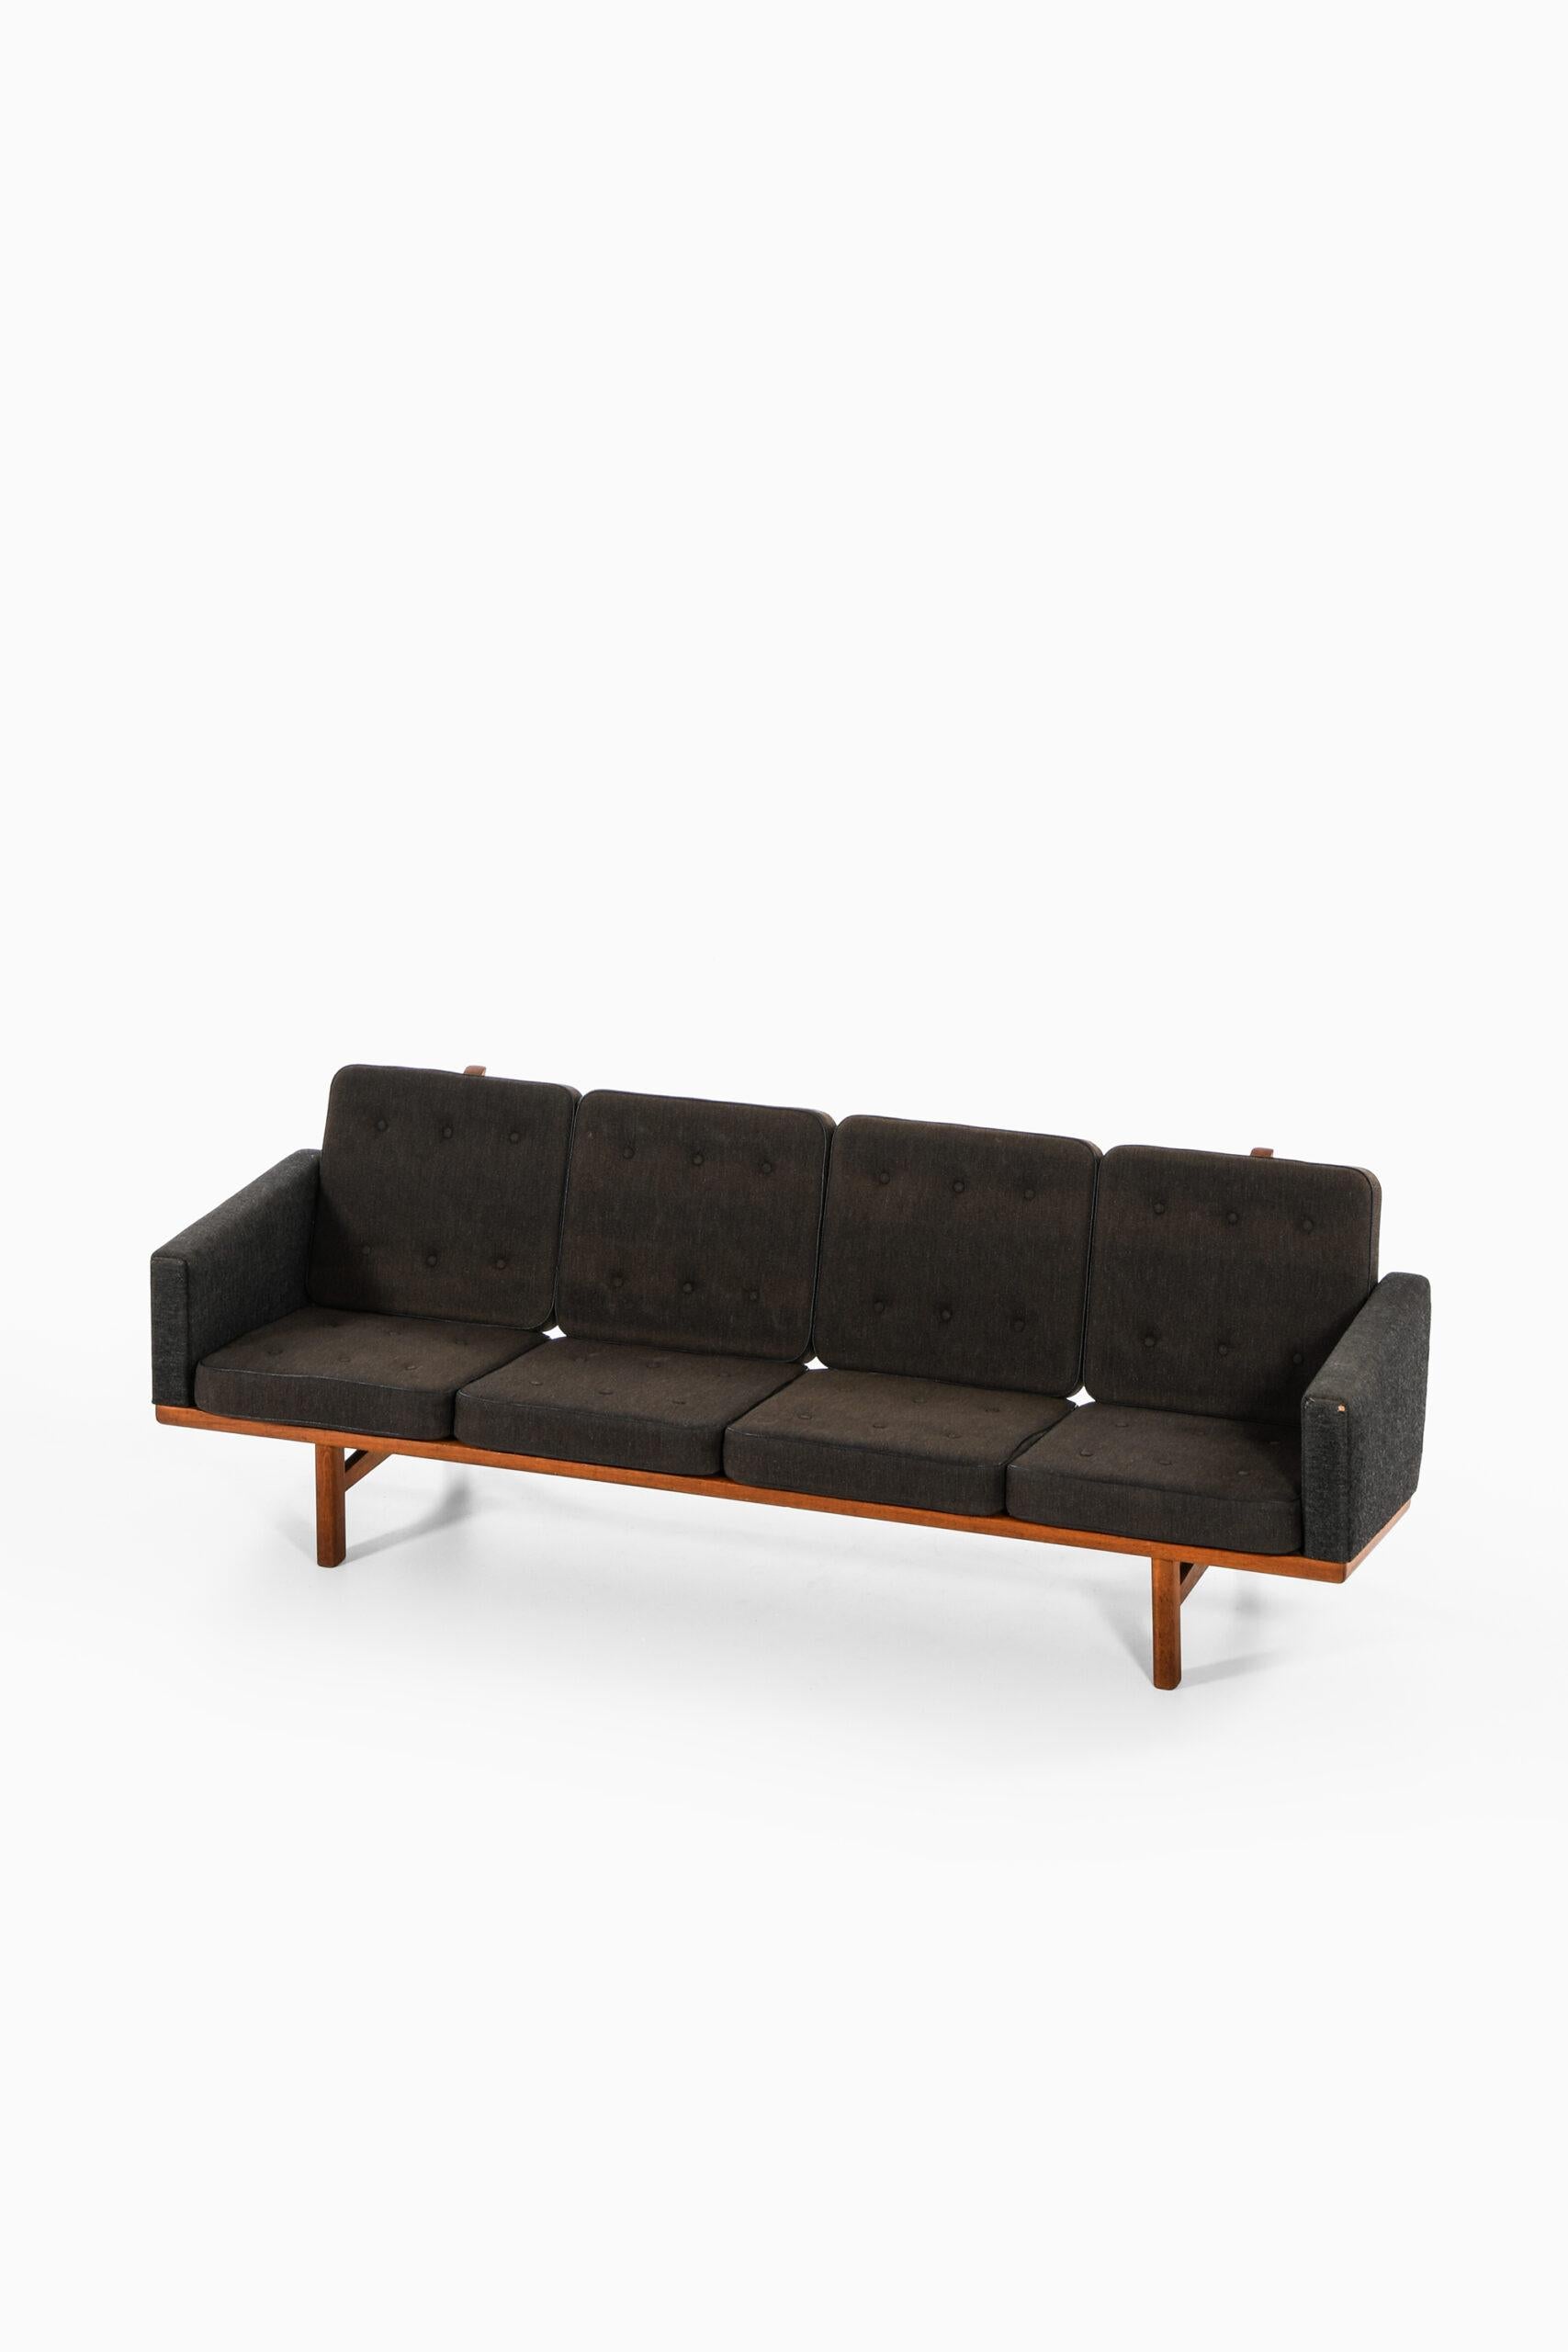 Rare sofa model GE-236/4 designed by Hans Wegner. Produced by GETAMA in Denmark.